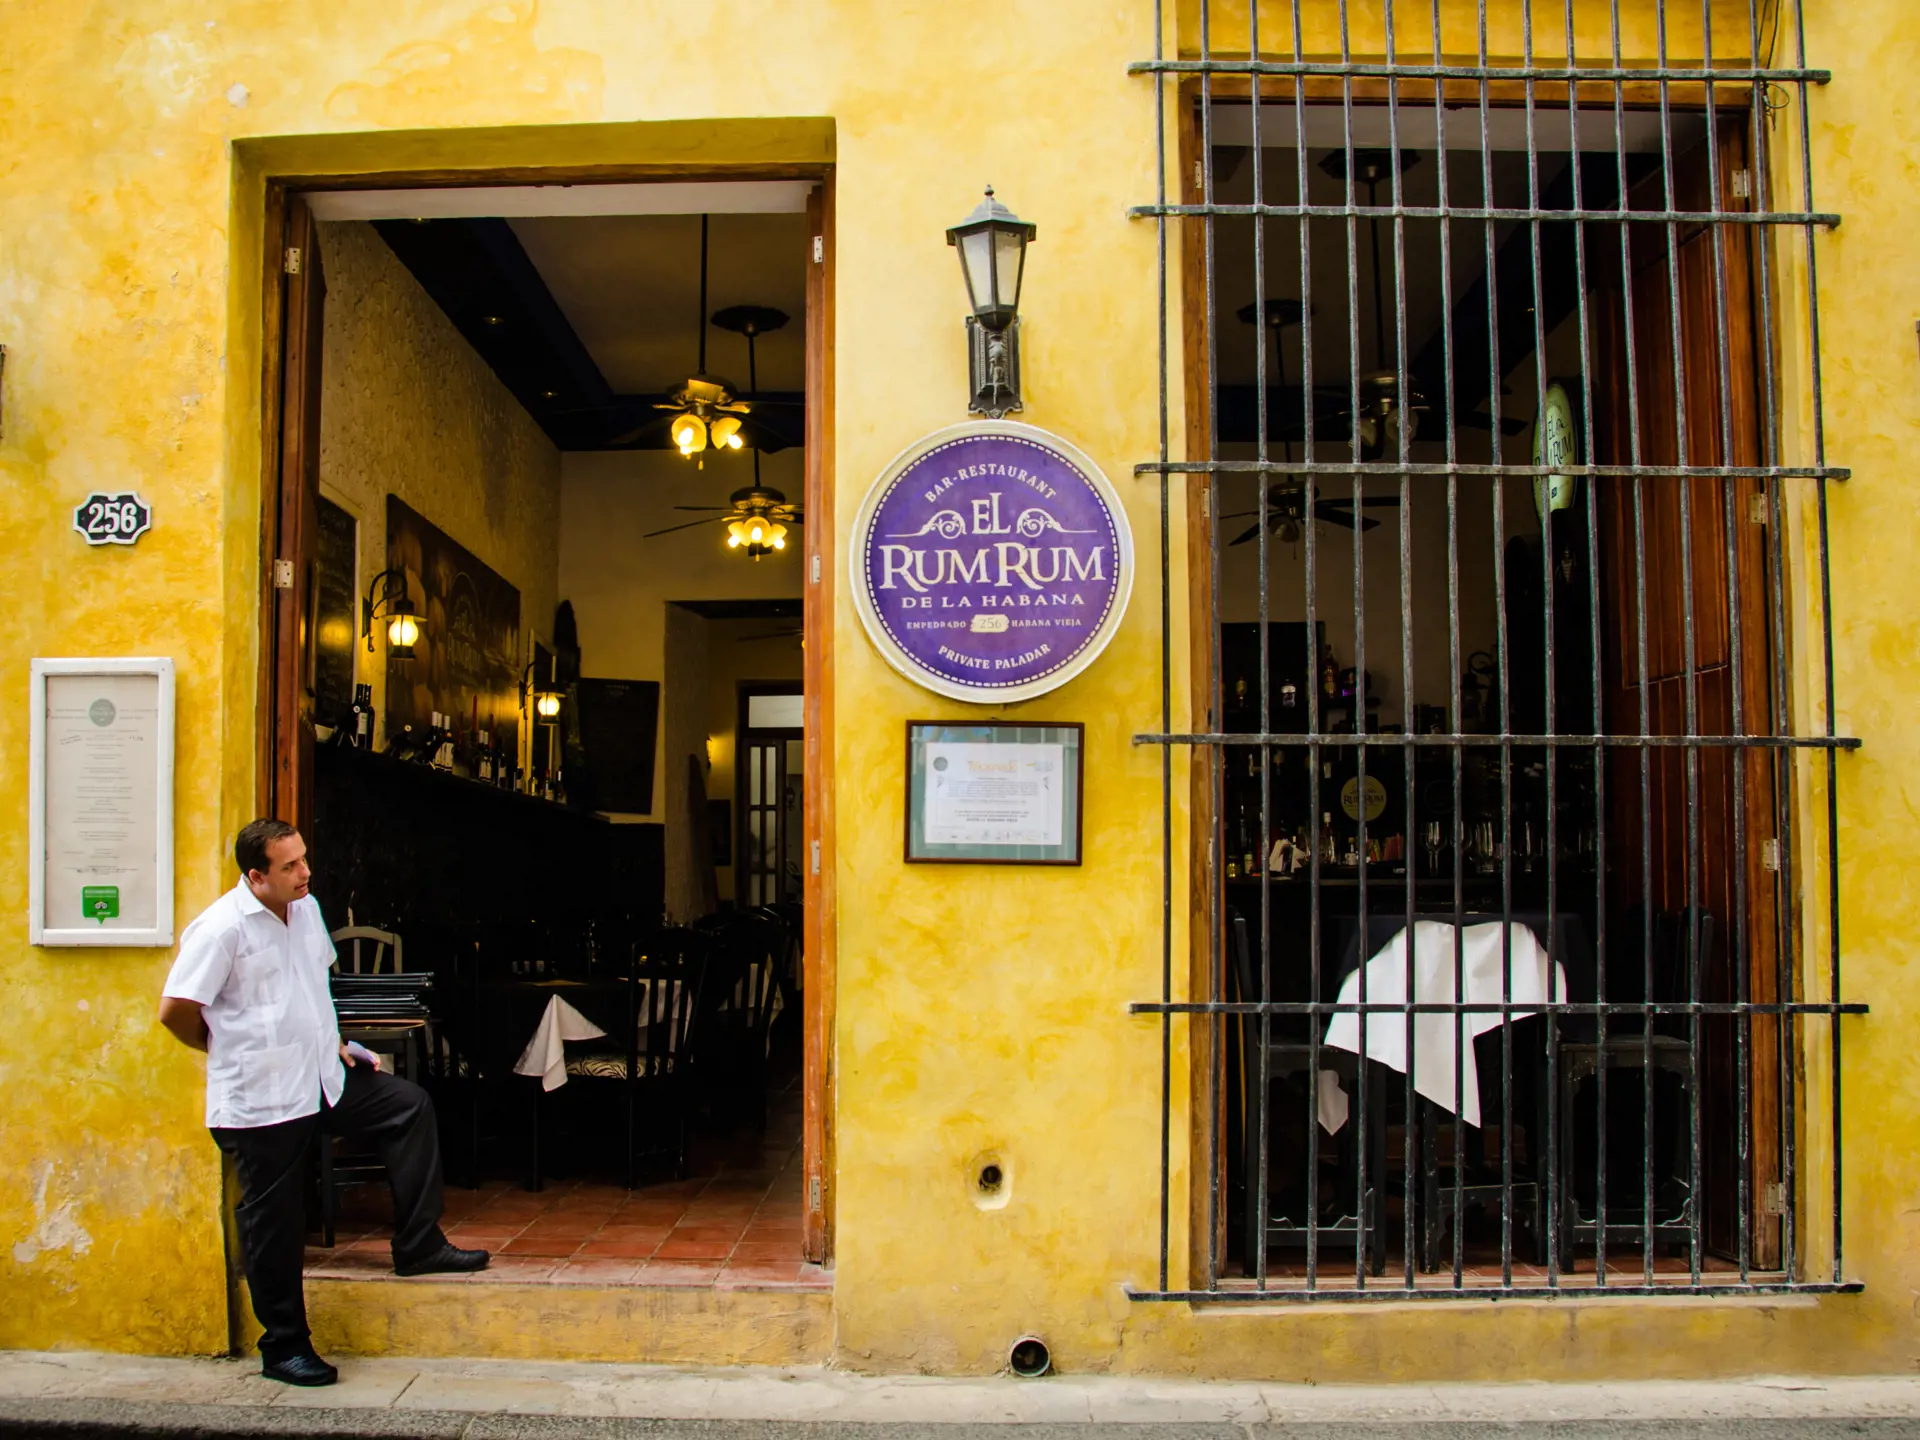 HAVANNA - Facaden til en af byens hyggelige restauranter "El Rum Rum".